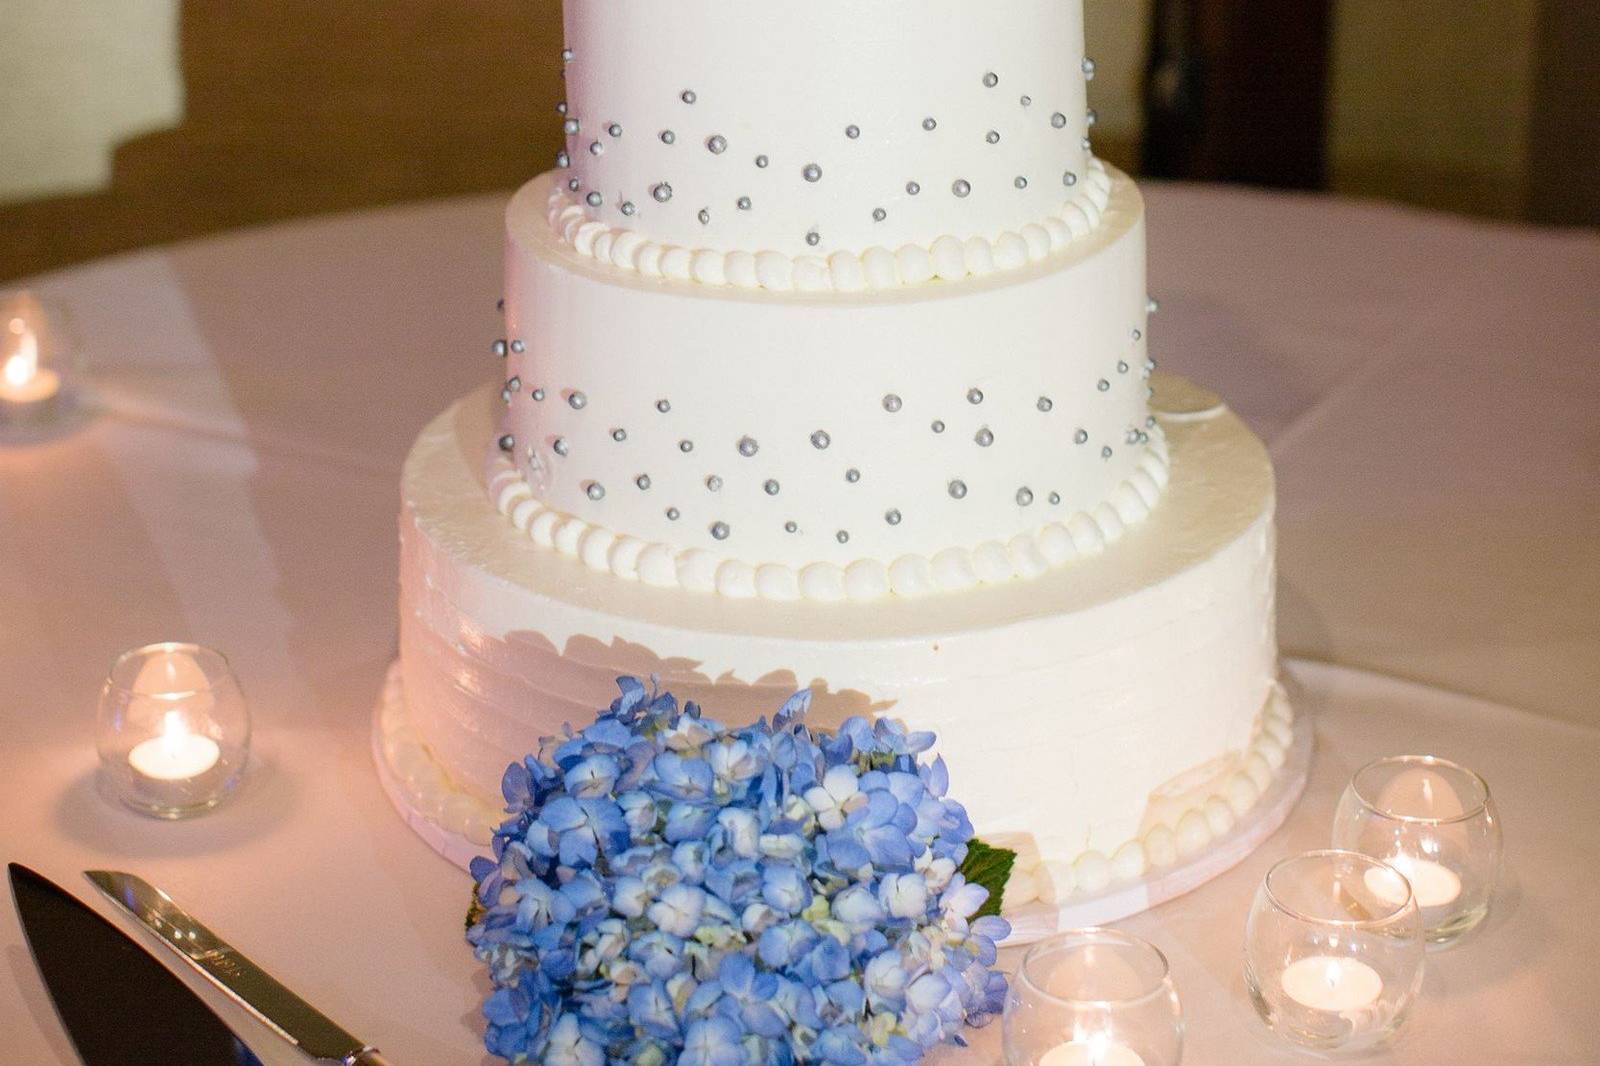 The French Gourmet Wedding Cake San Diego Ca Weddingwire